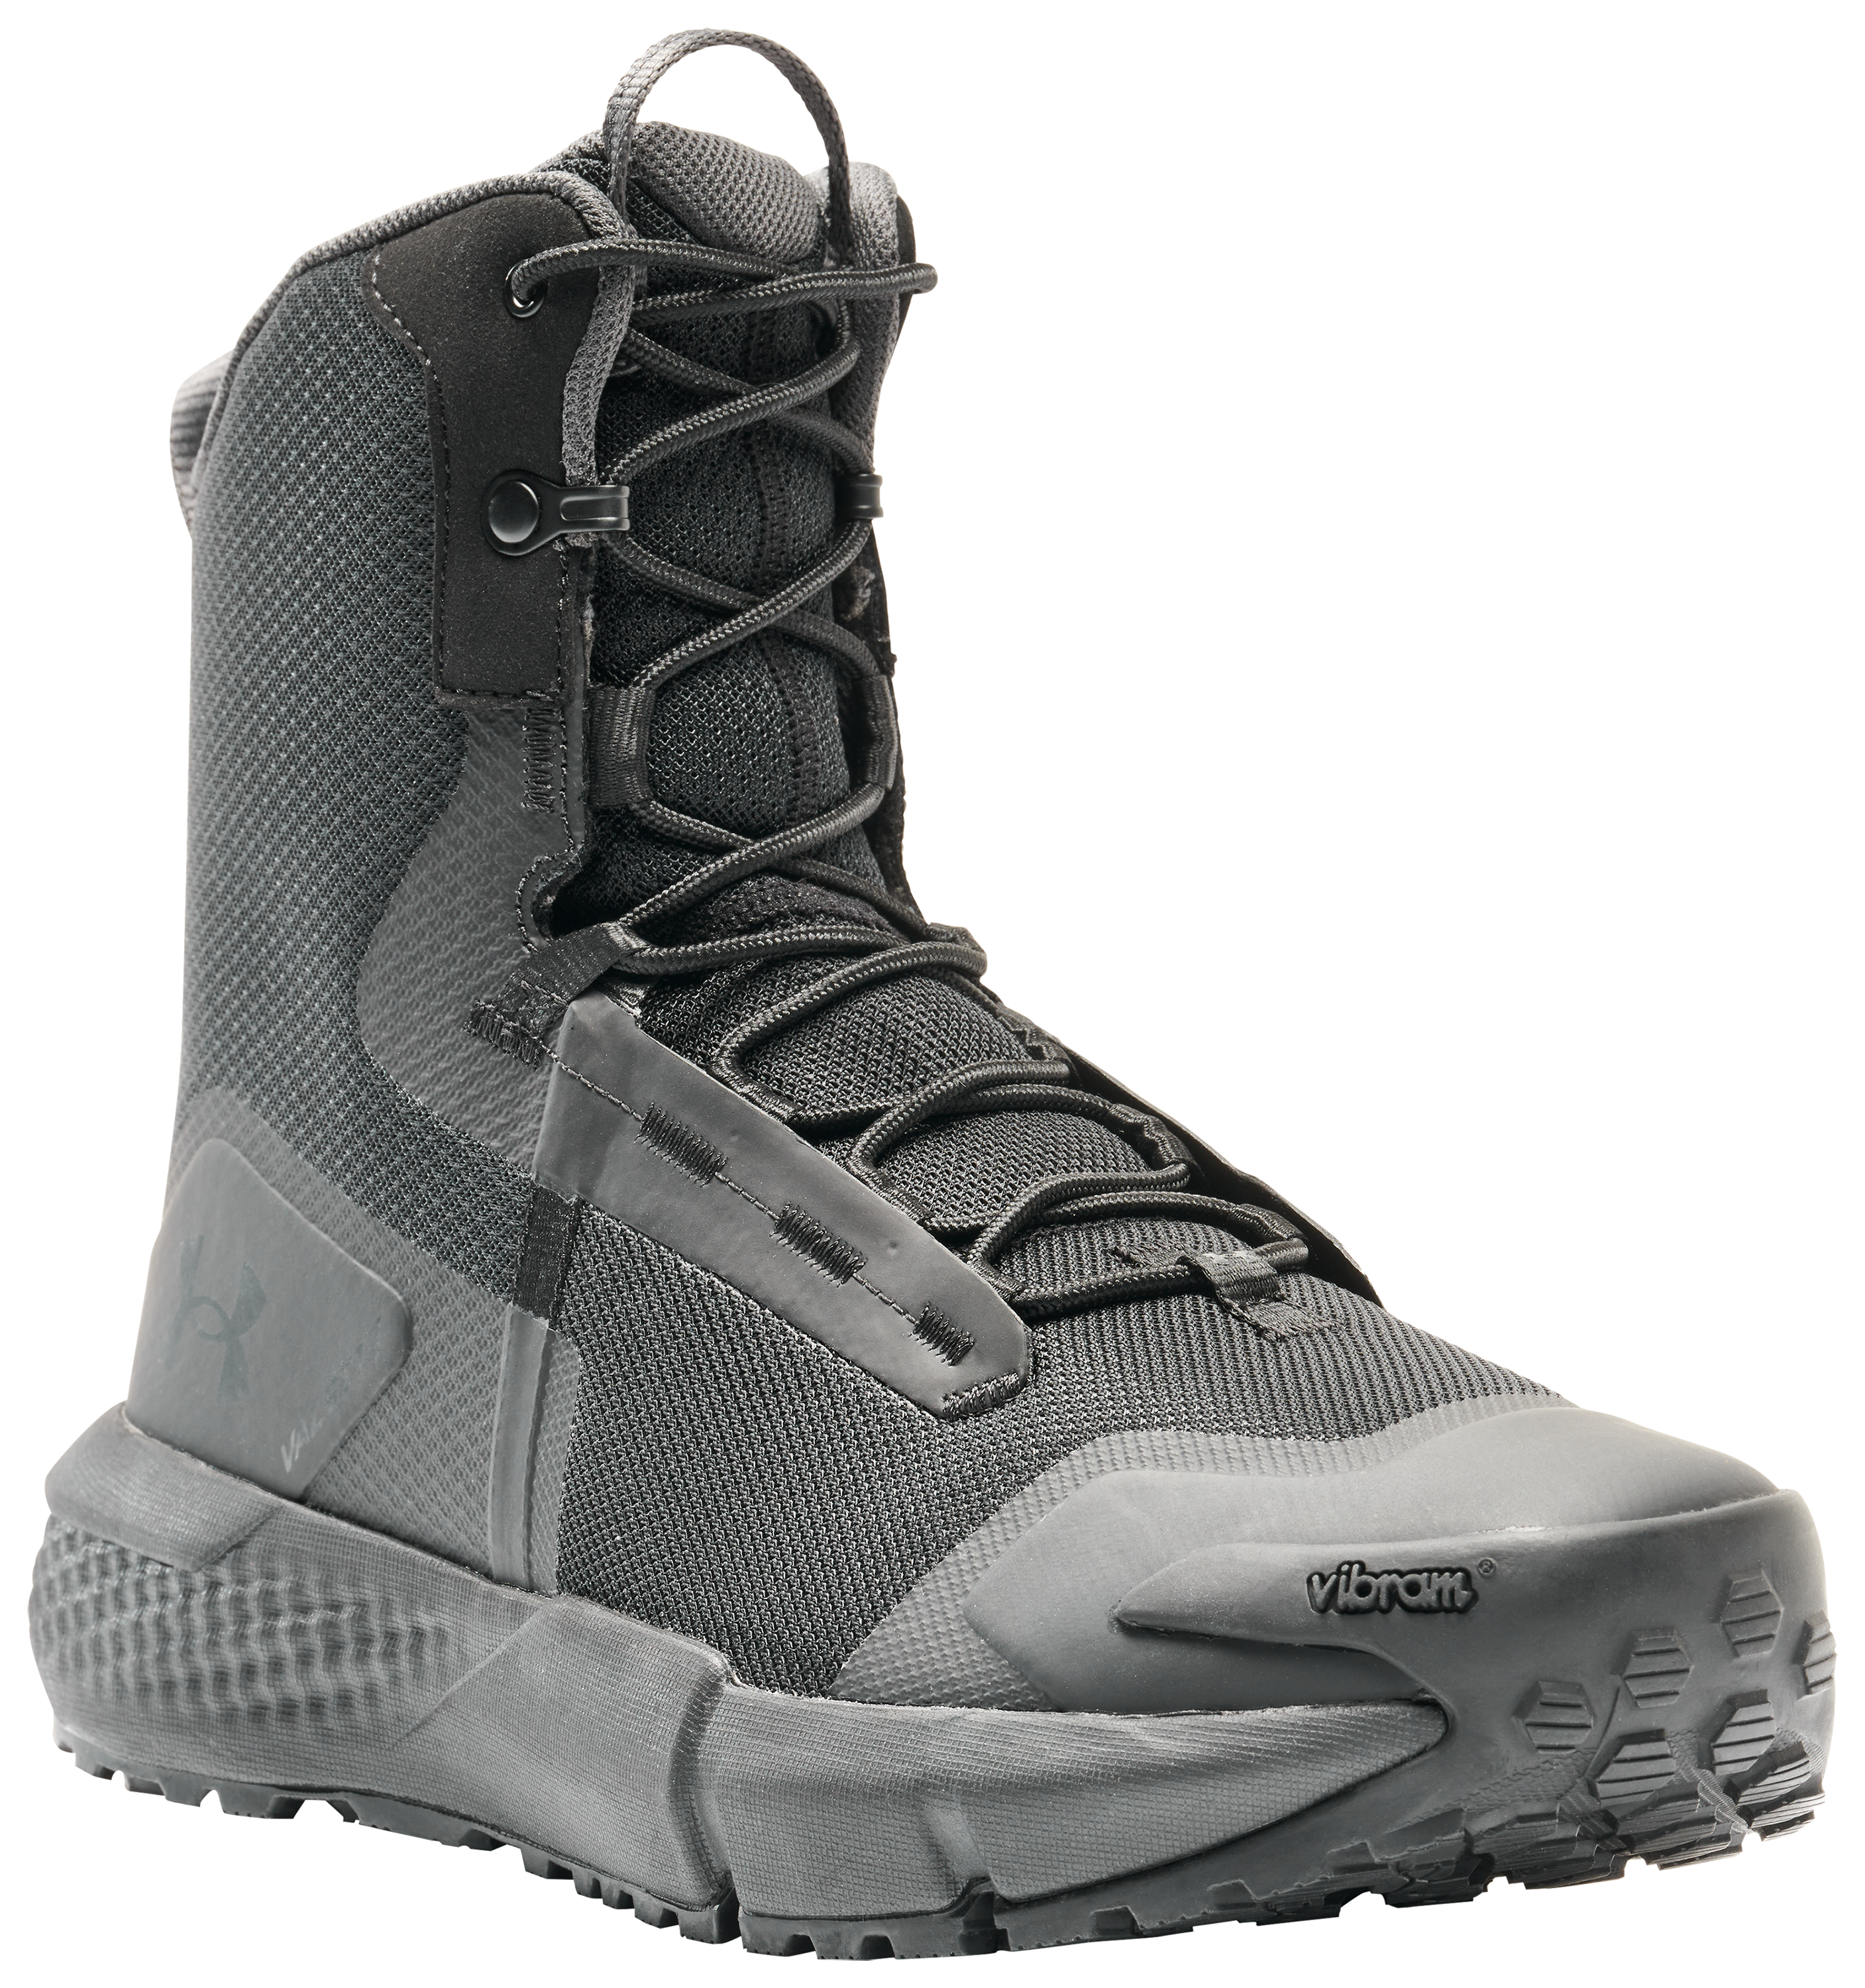 Under Armour Valsetz Side Zip Tactical Boots for Men - Black - 9.5M